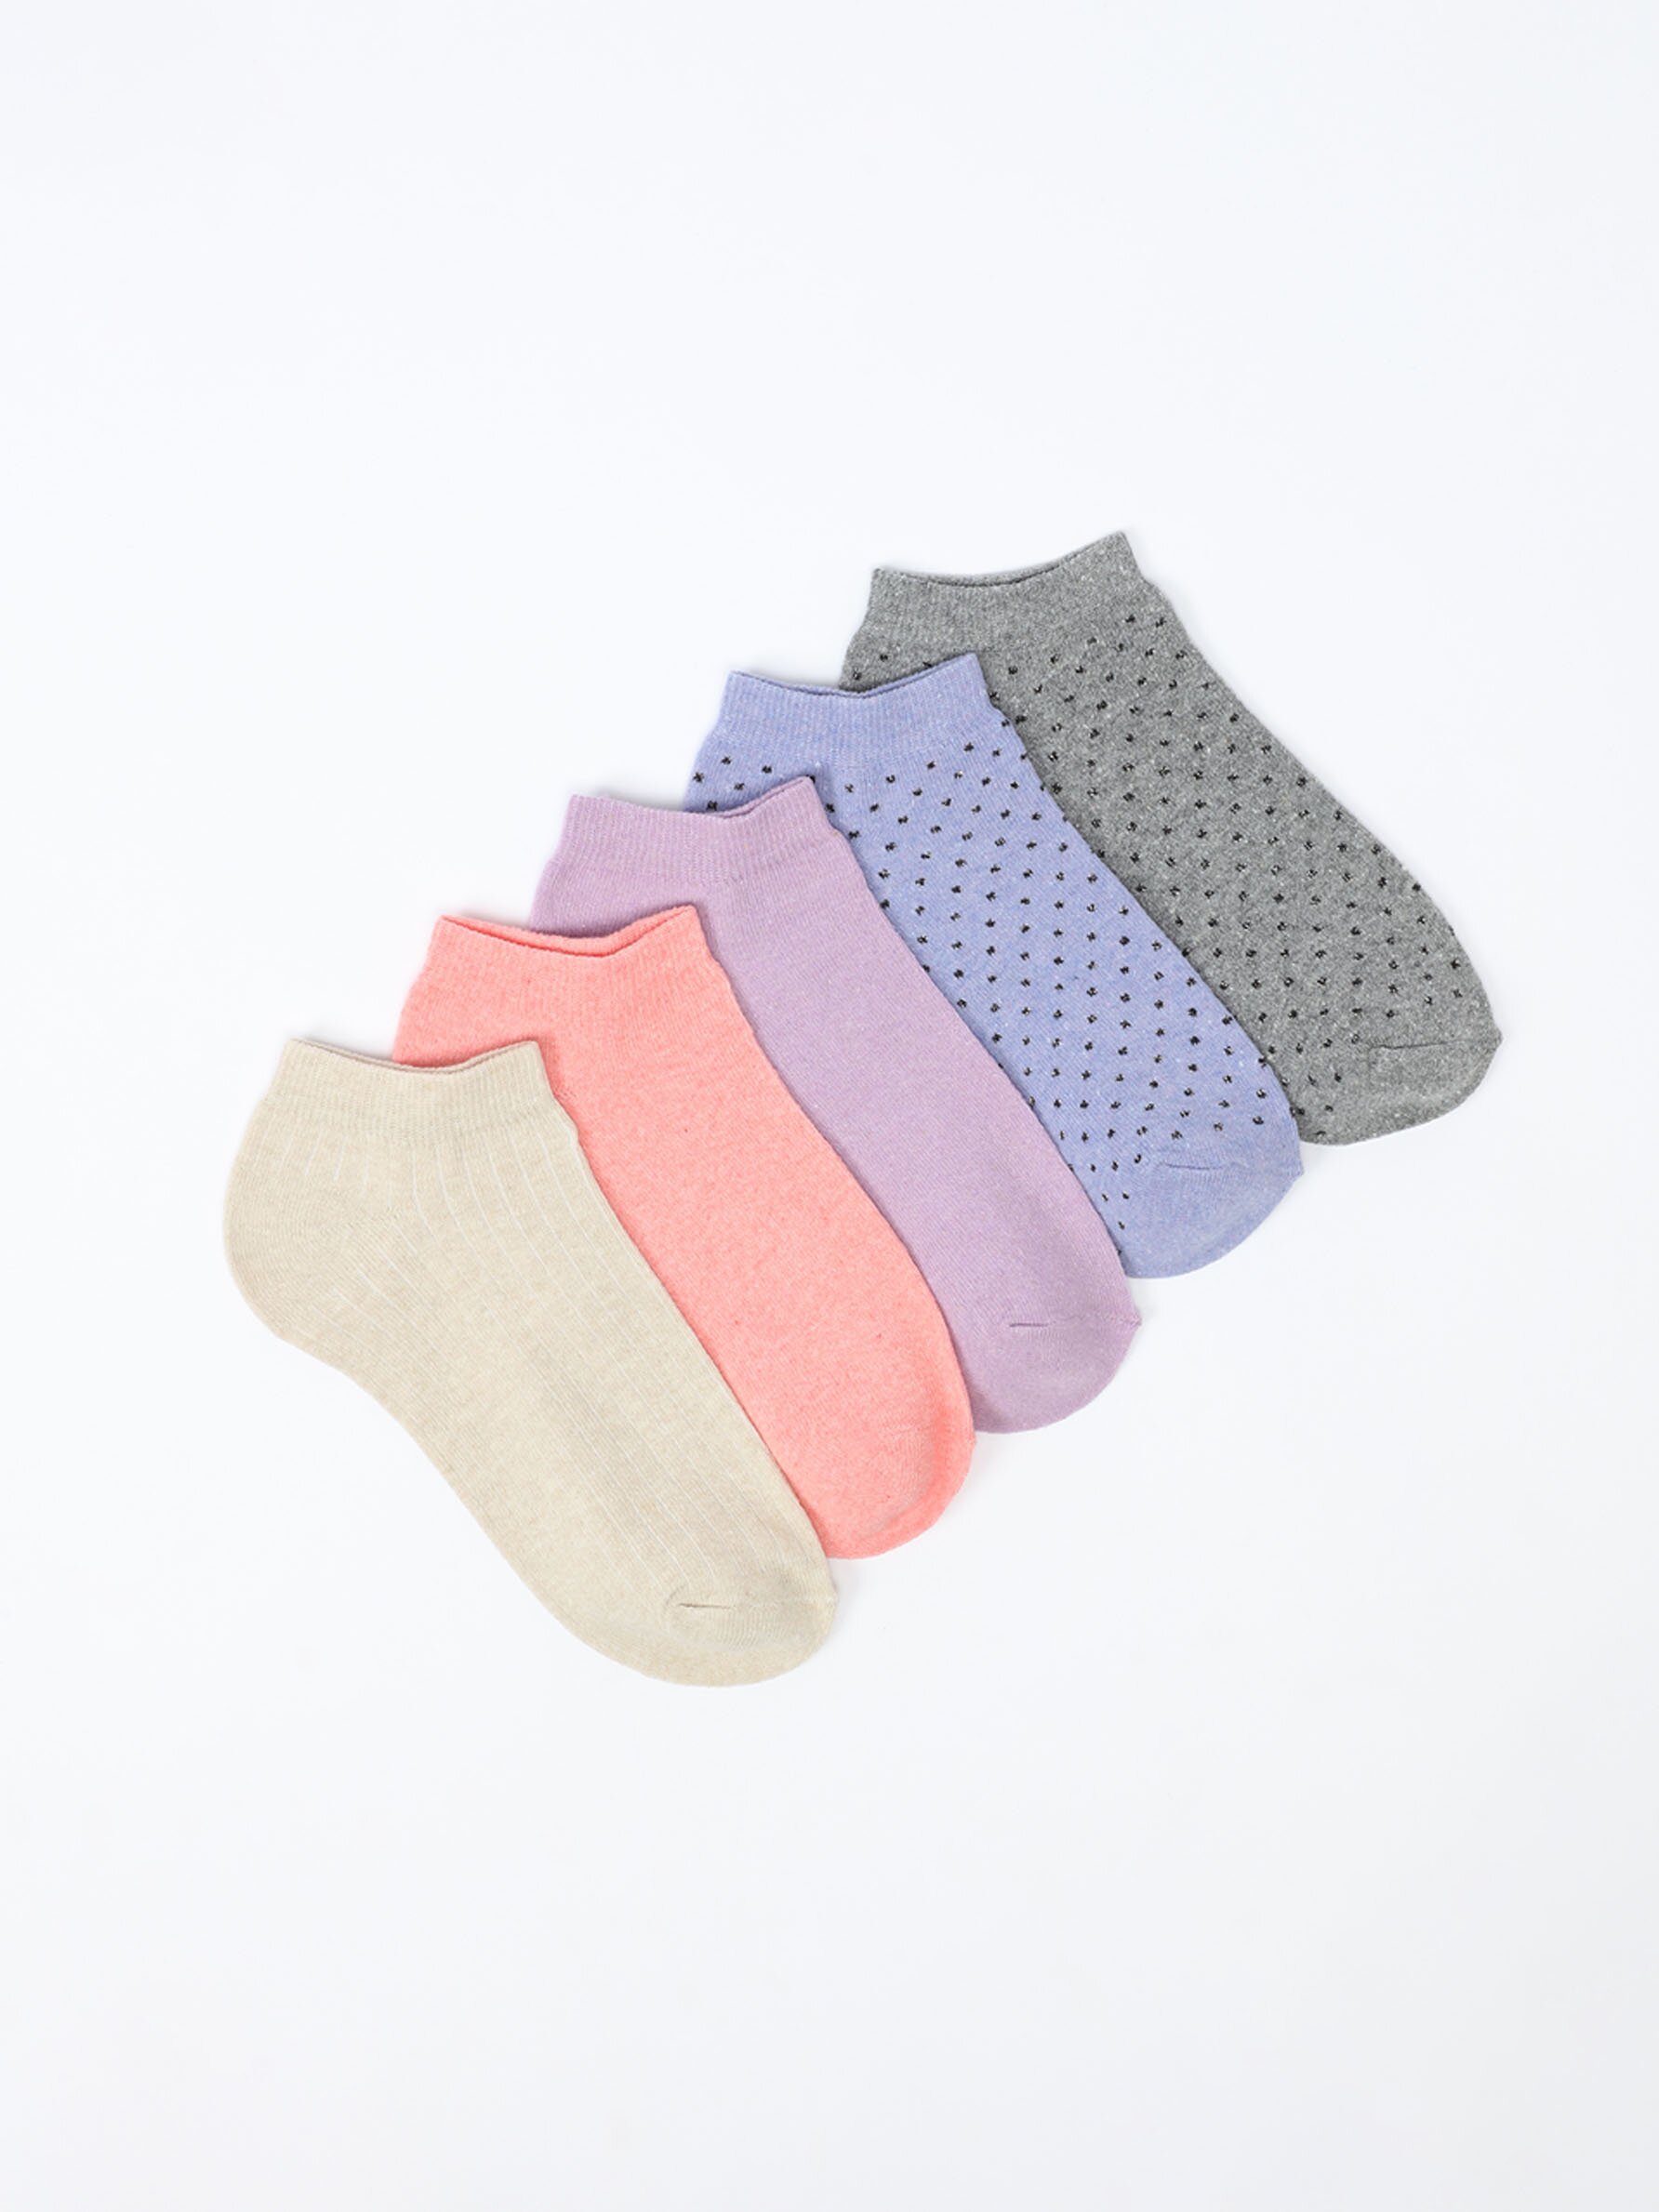 Pack de 5 pares de calcetines tobilleros combinados - Calcetines